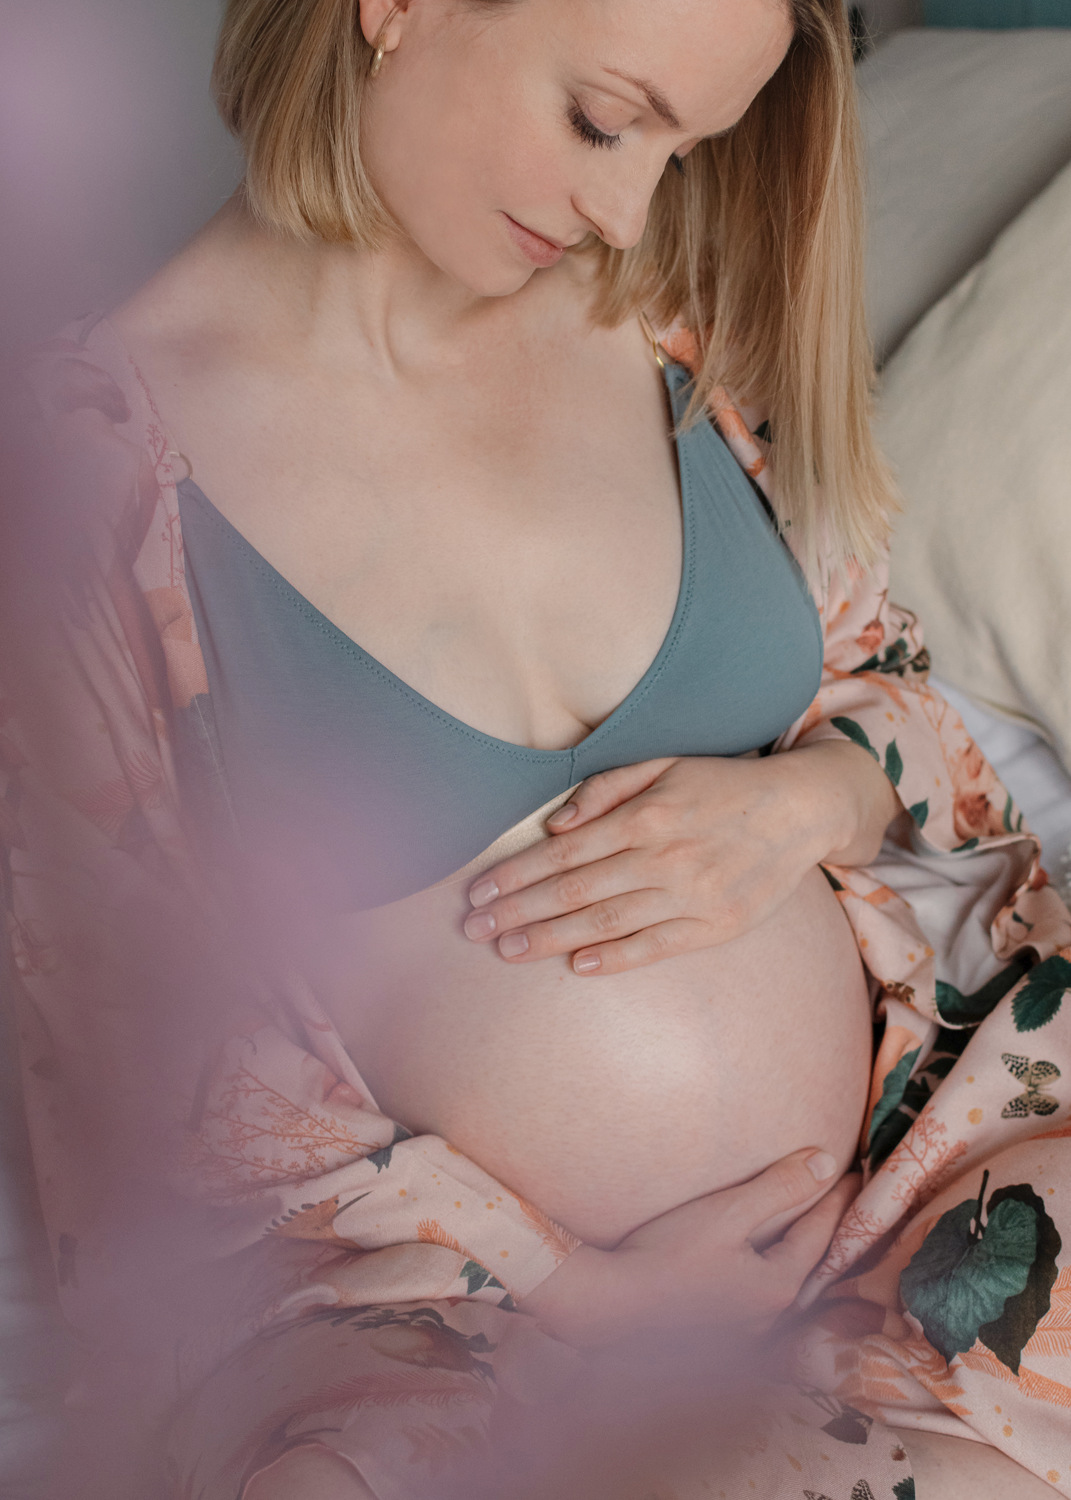 mum and her pregnancy bump, Family photographer in Bristol, Agi Lebiedz Photography